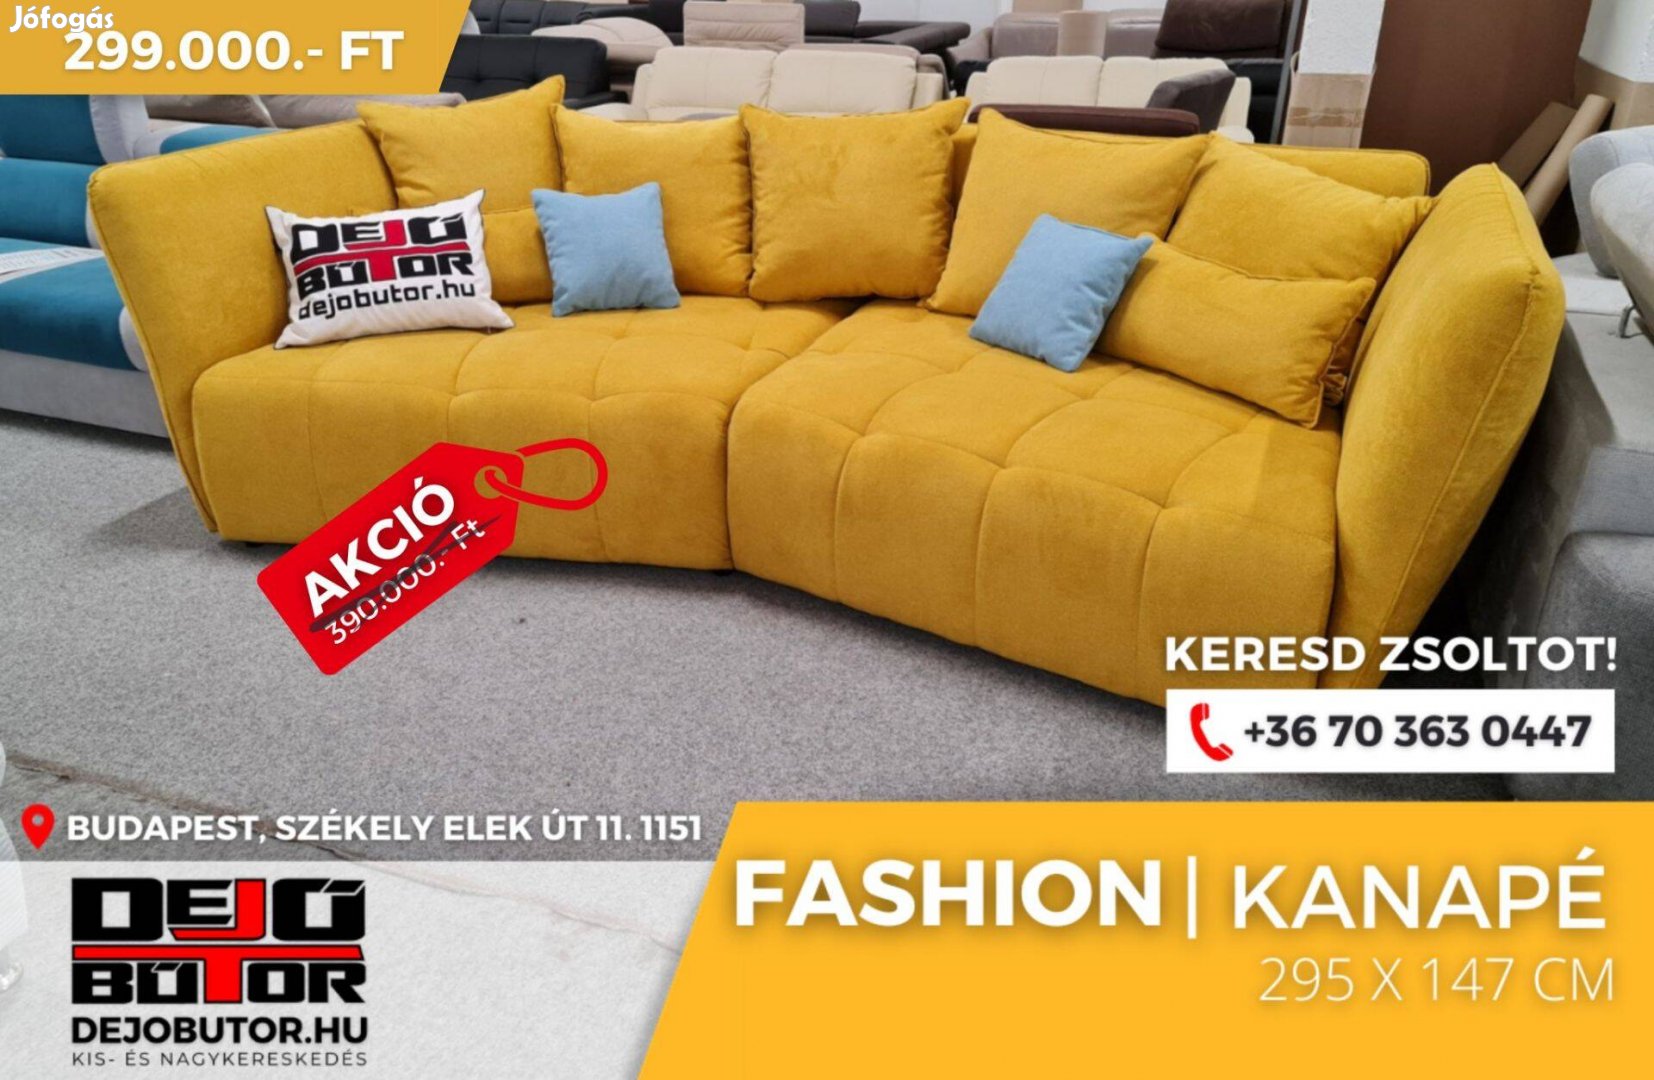 Fashion rugós kanapé 295x147 cm ülőgarnitúra sárga sarok fix bútor